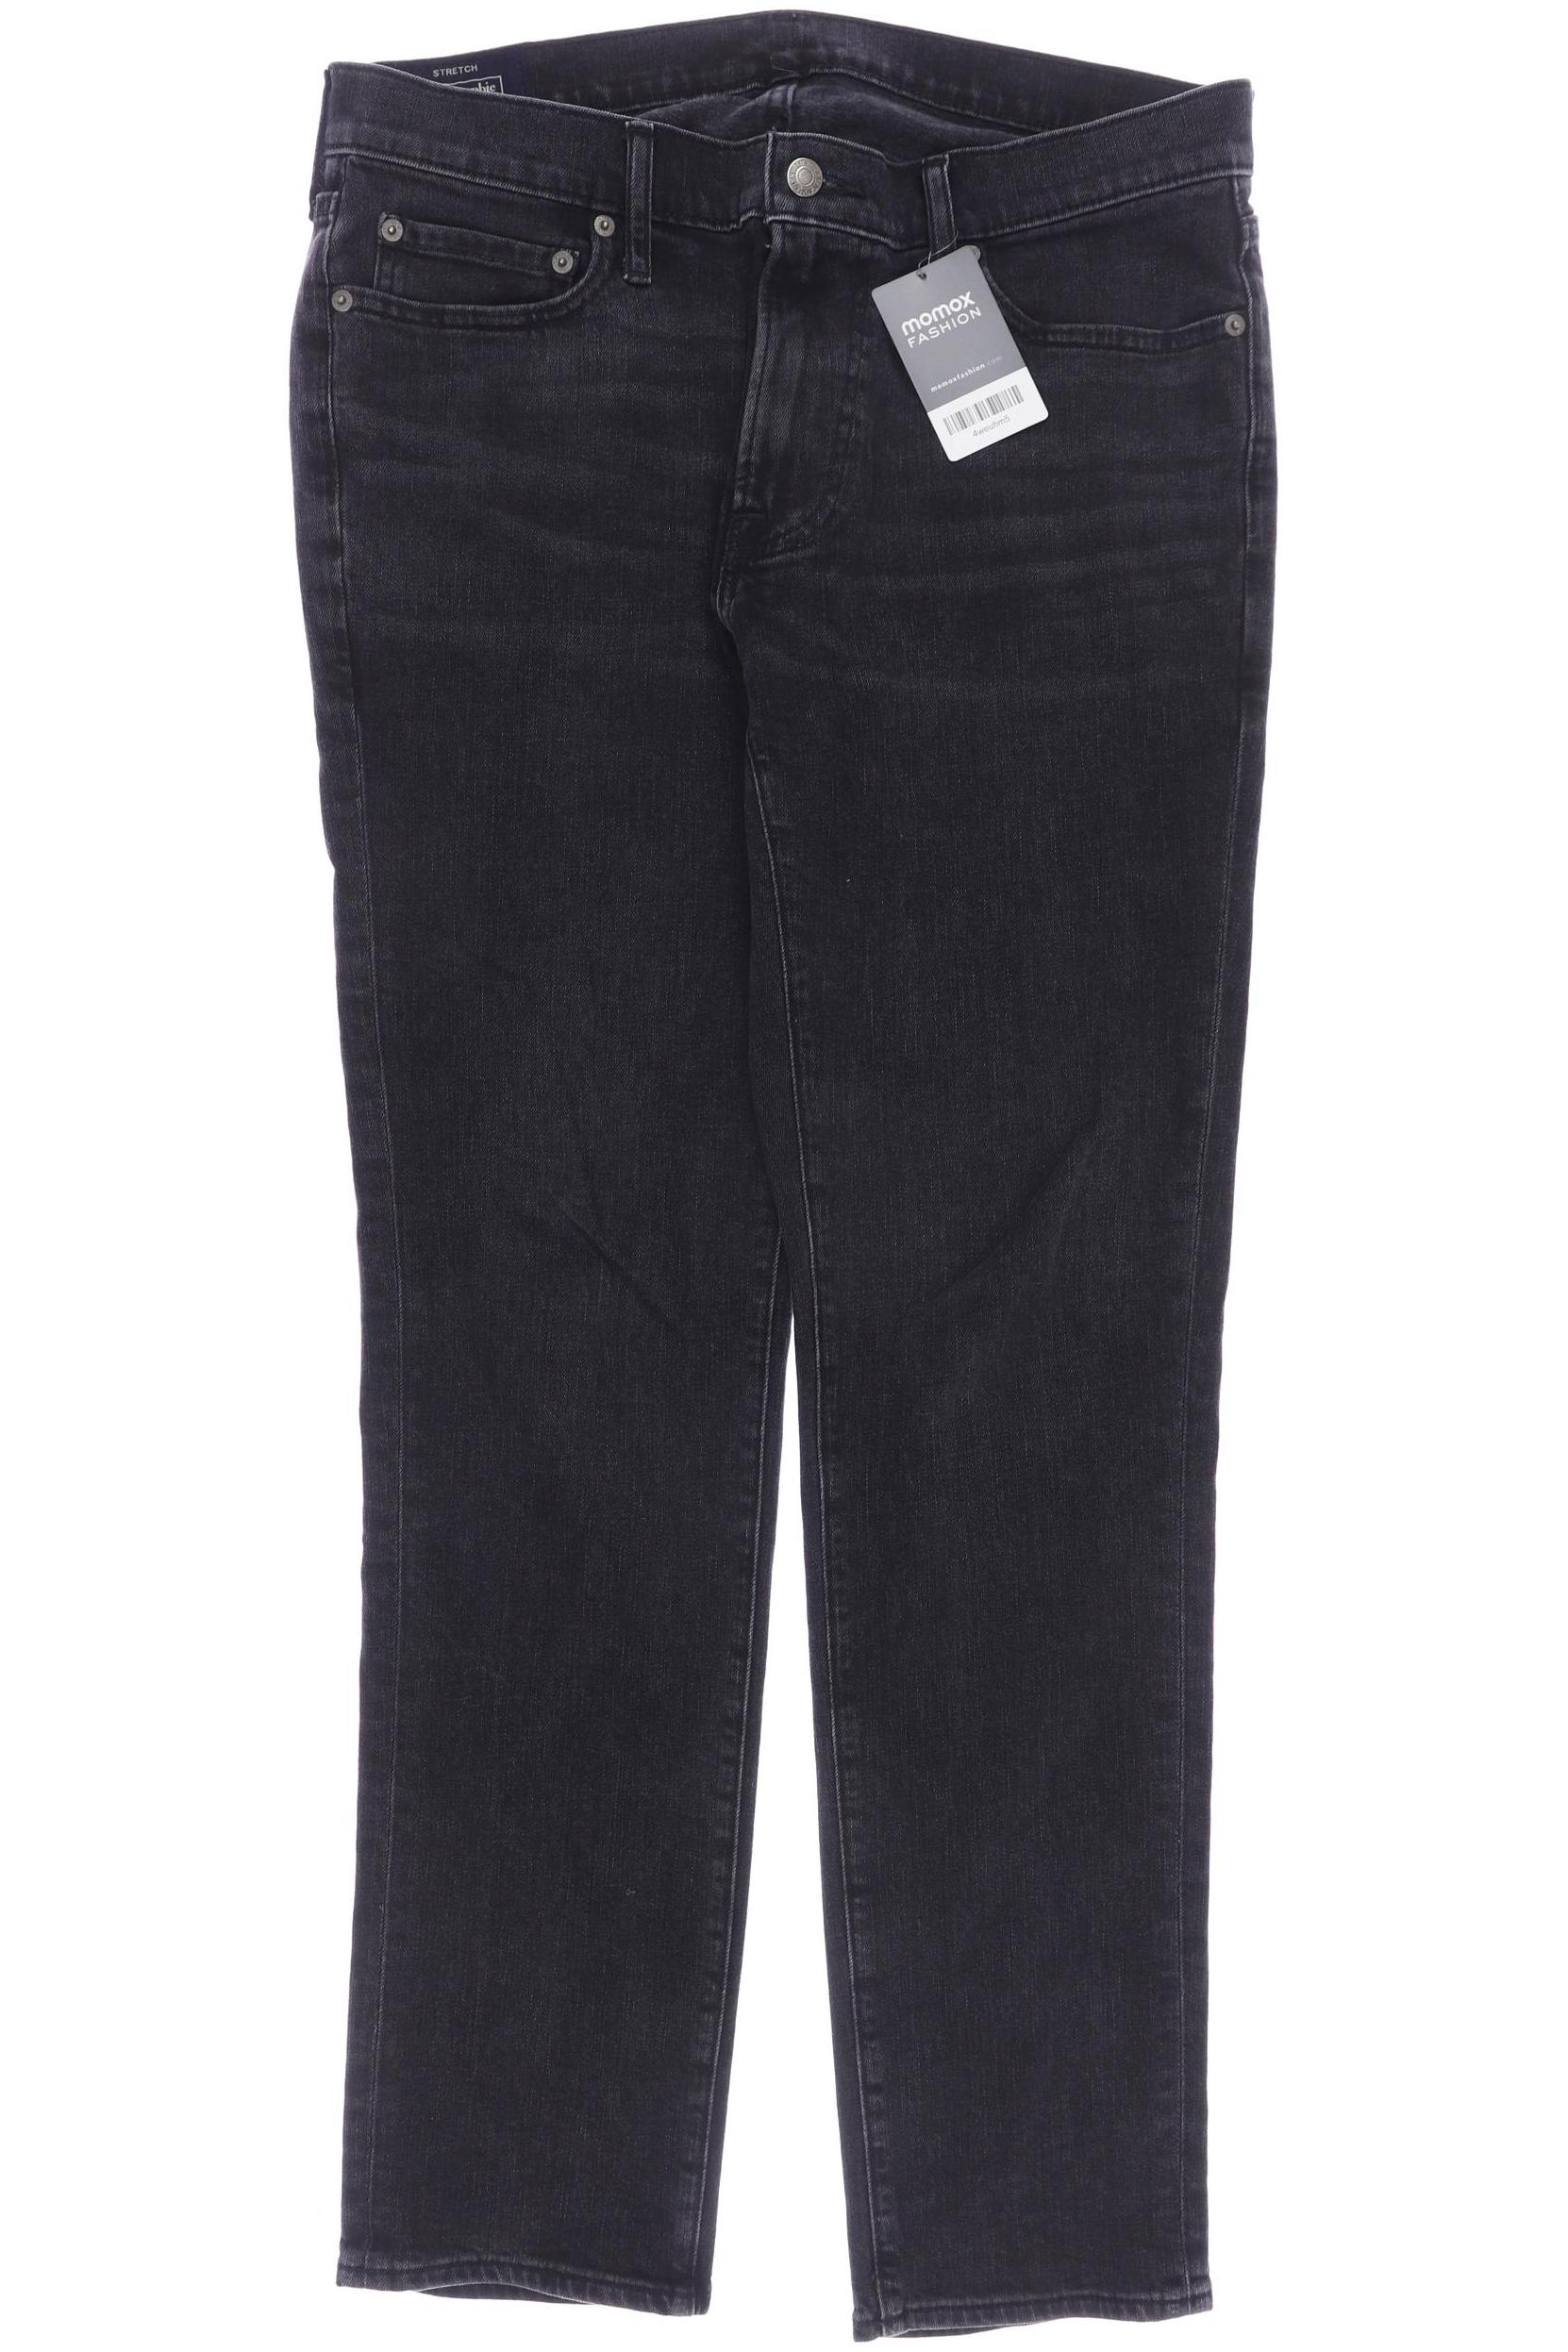 Abercrombie & Fitch Herren Jeans, grau von Abercrombie & Fitch